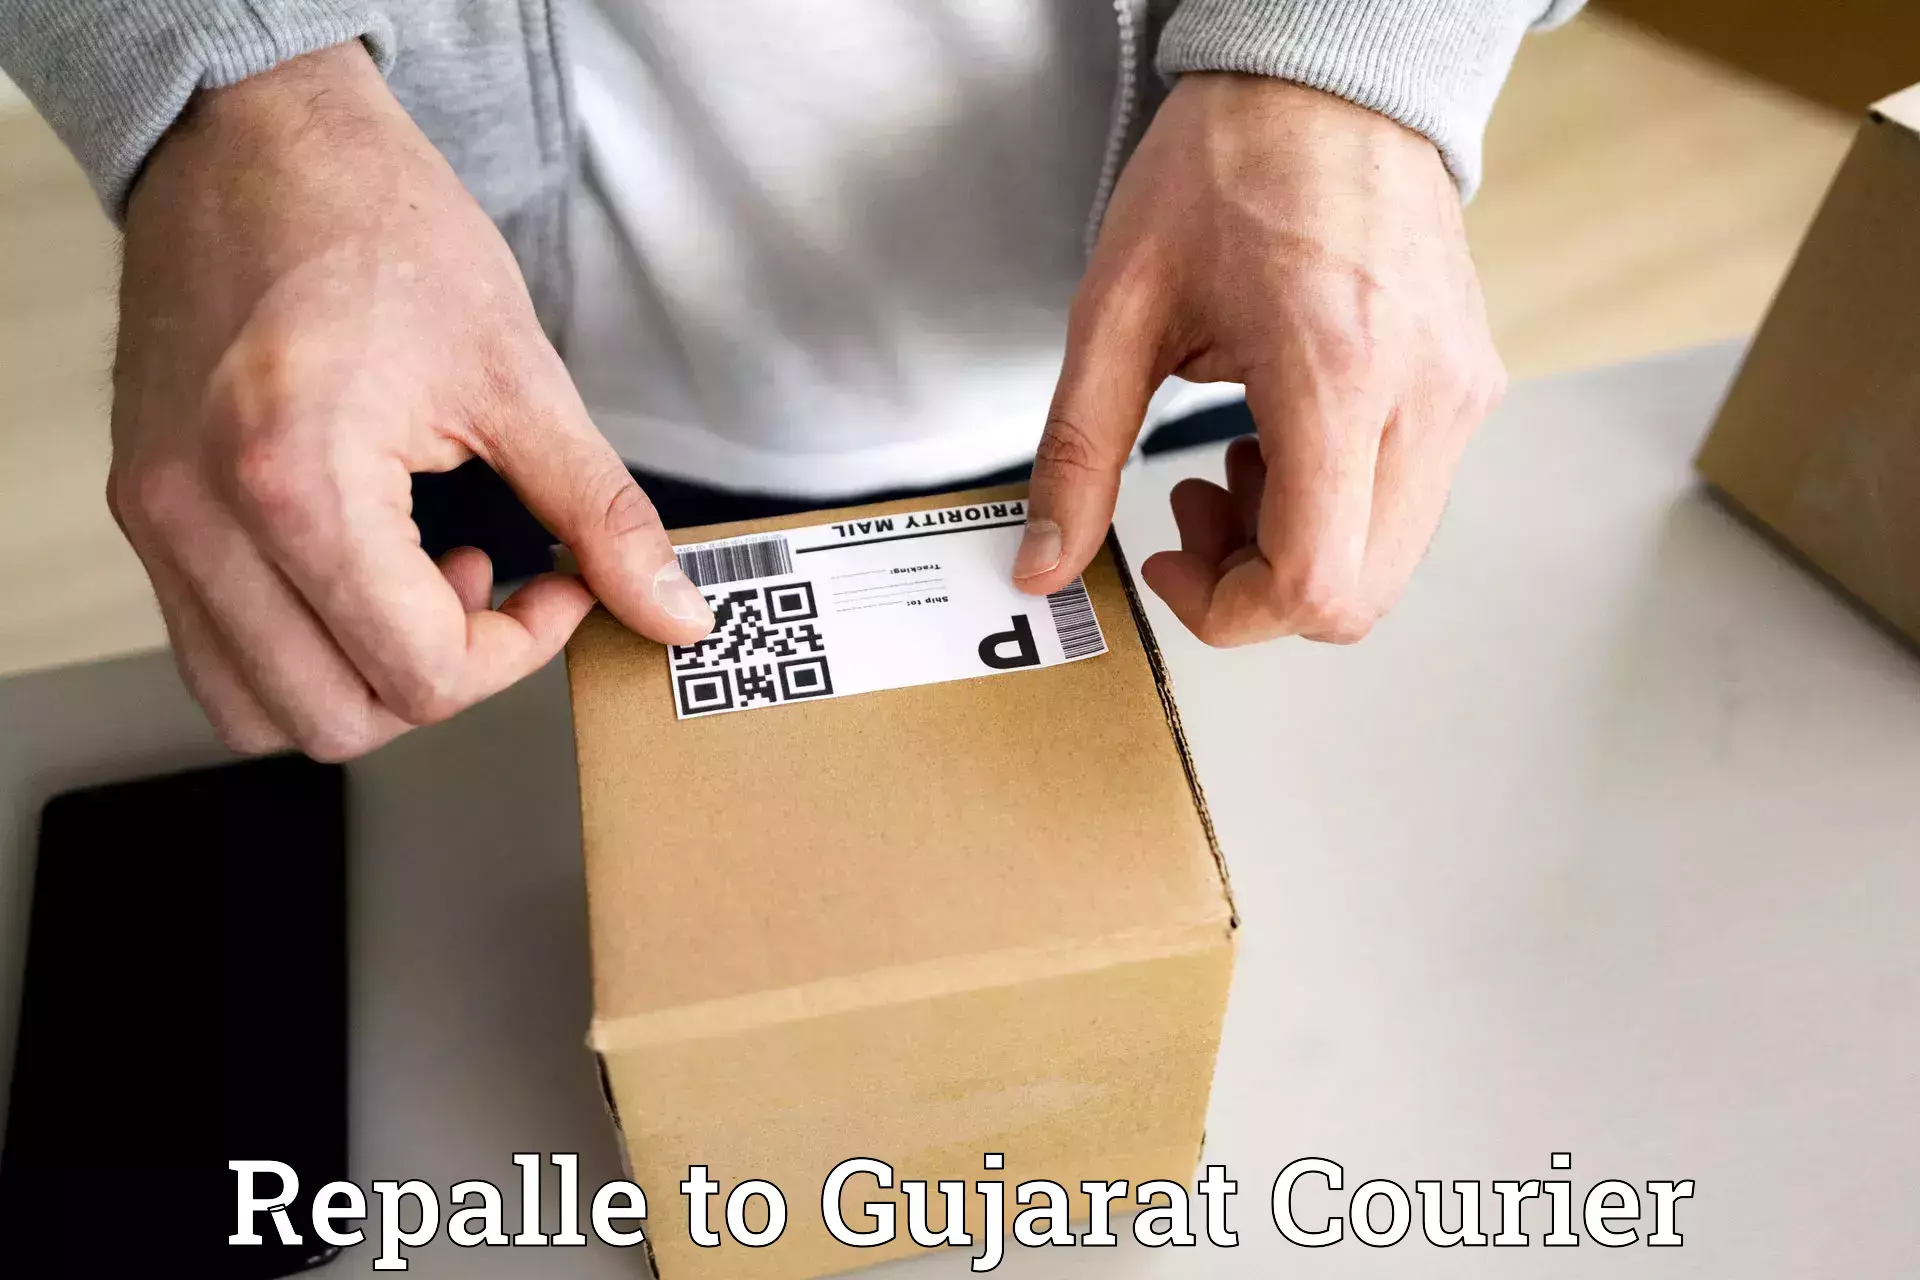 Courier service partnerships Repalle to Gandhinagar